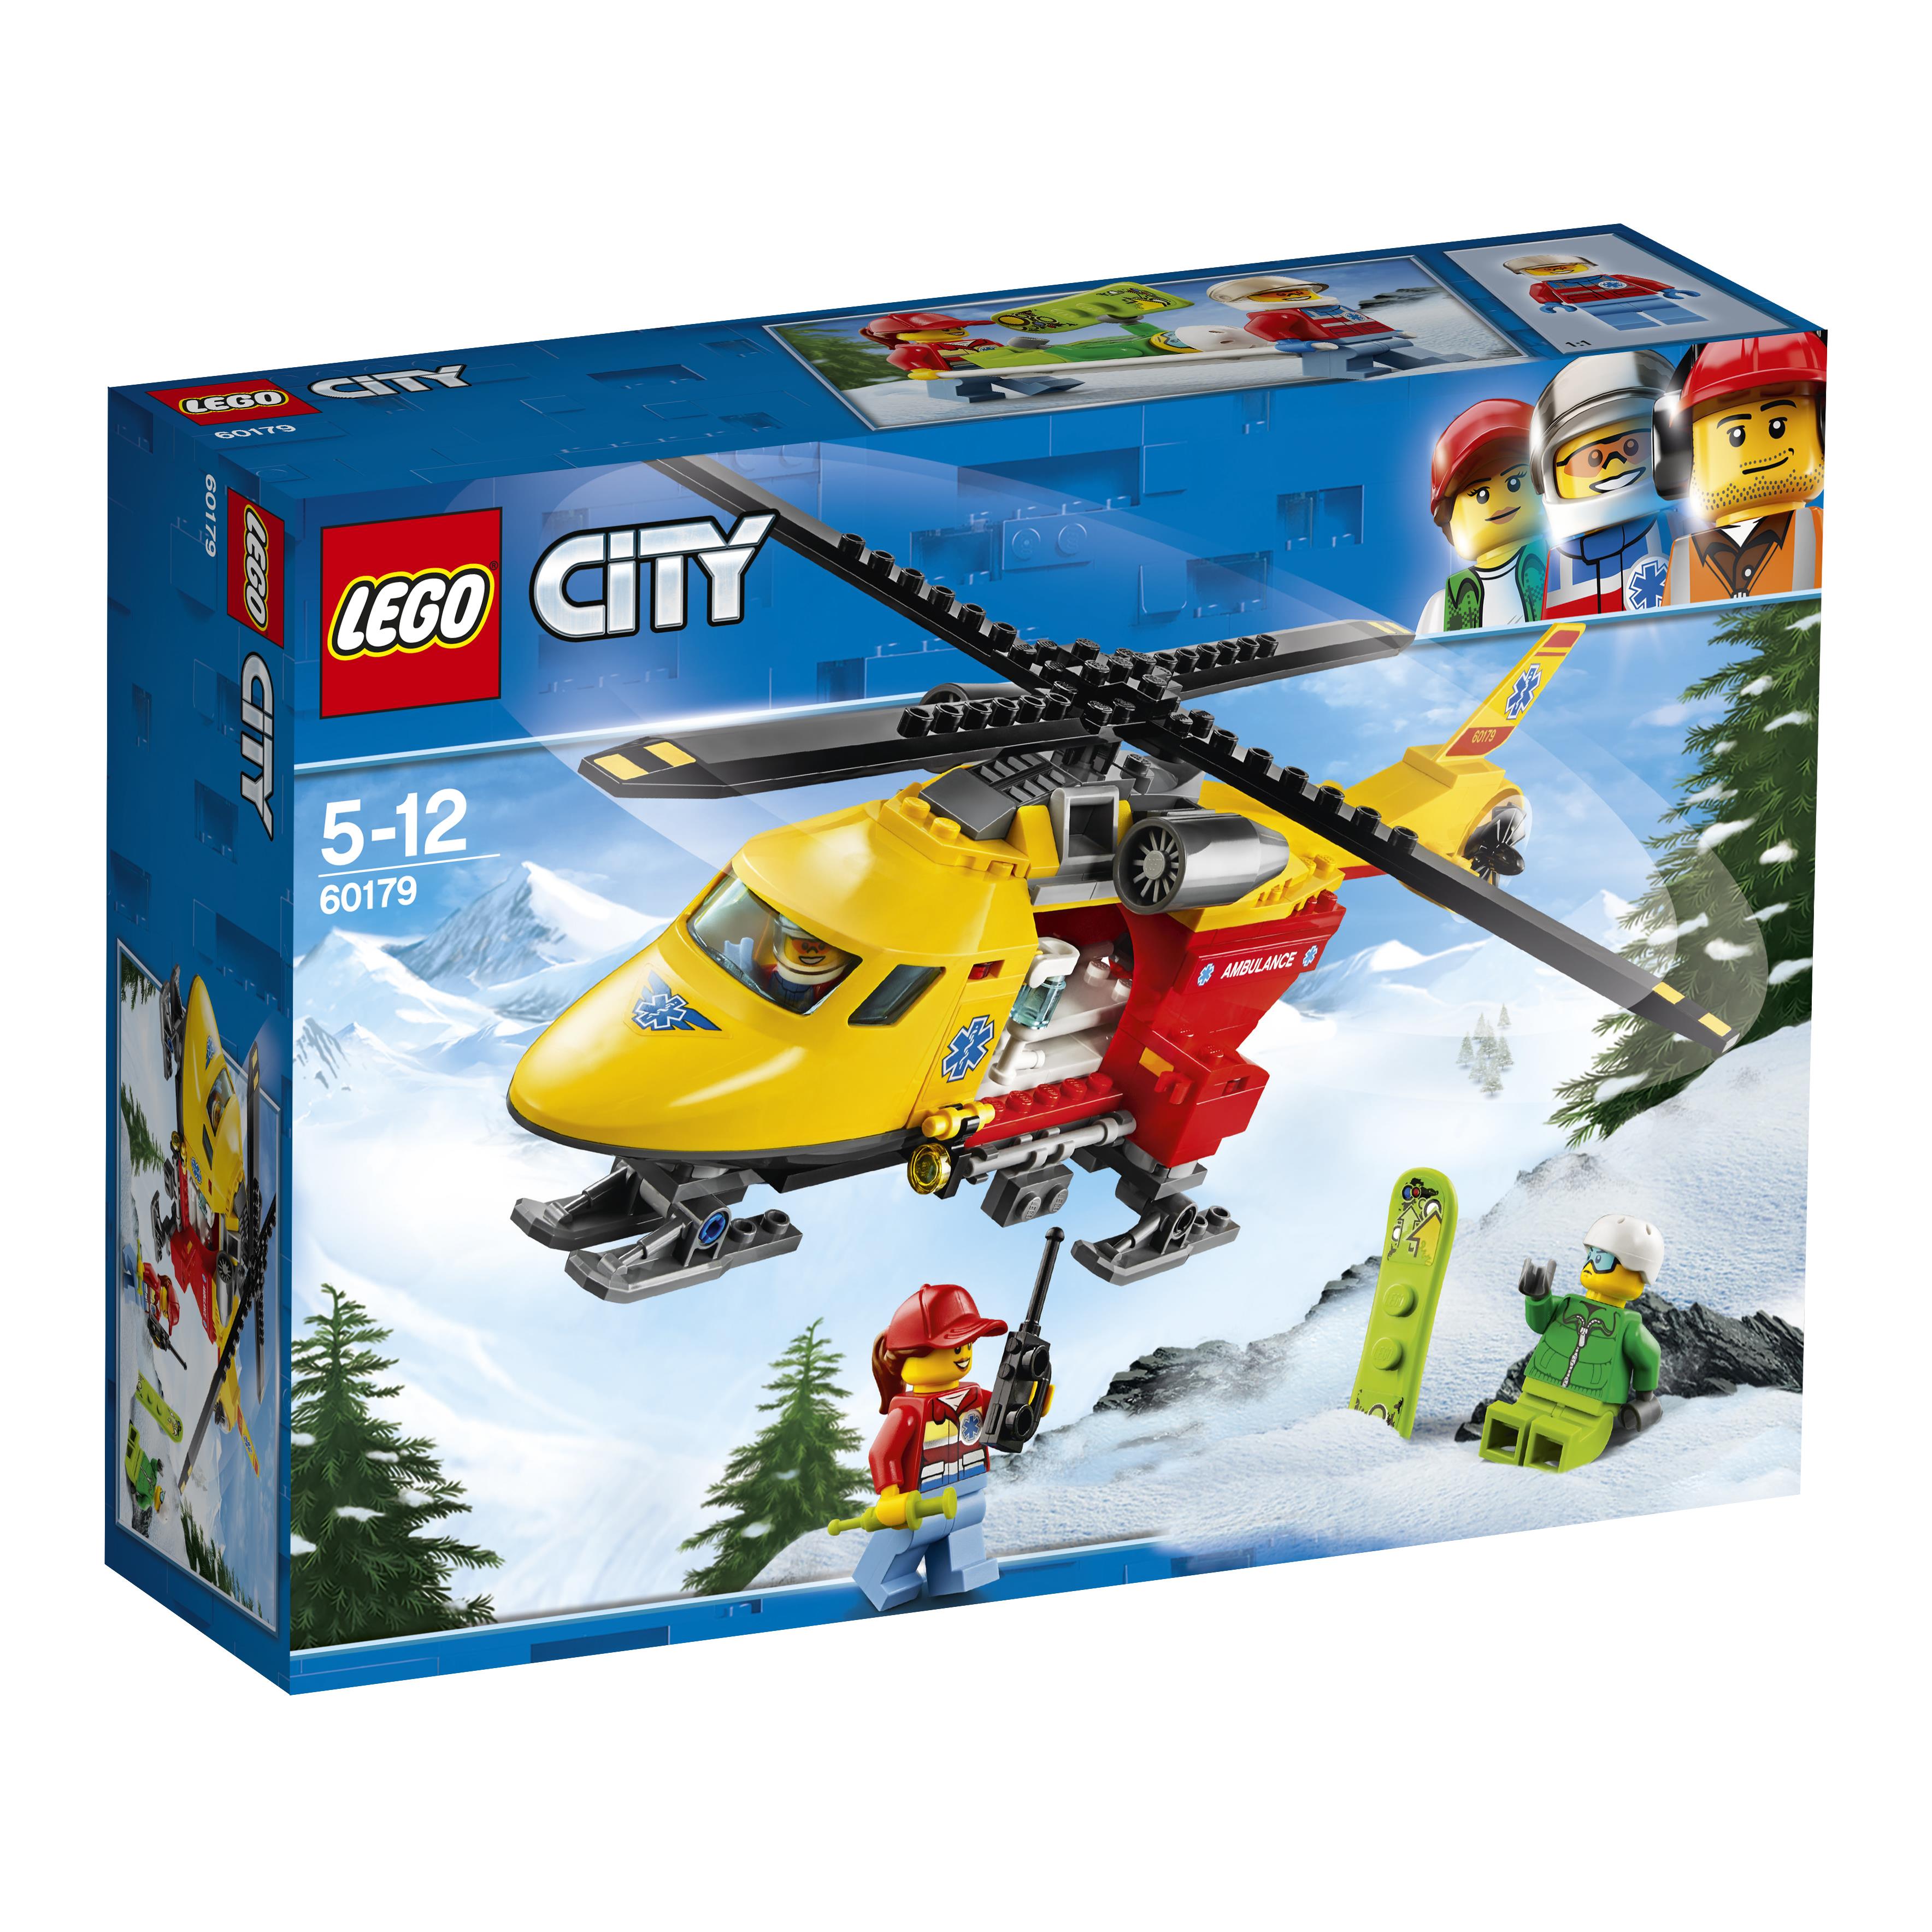 LEGO City Great Vehicles